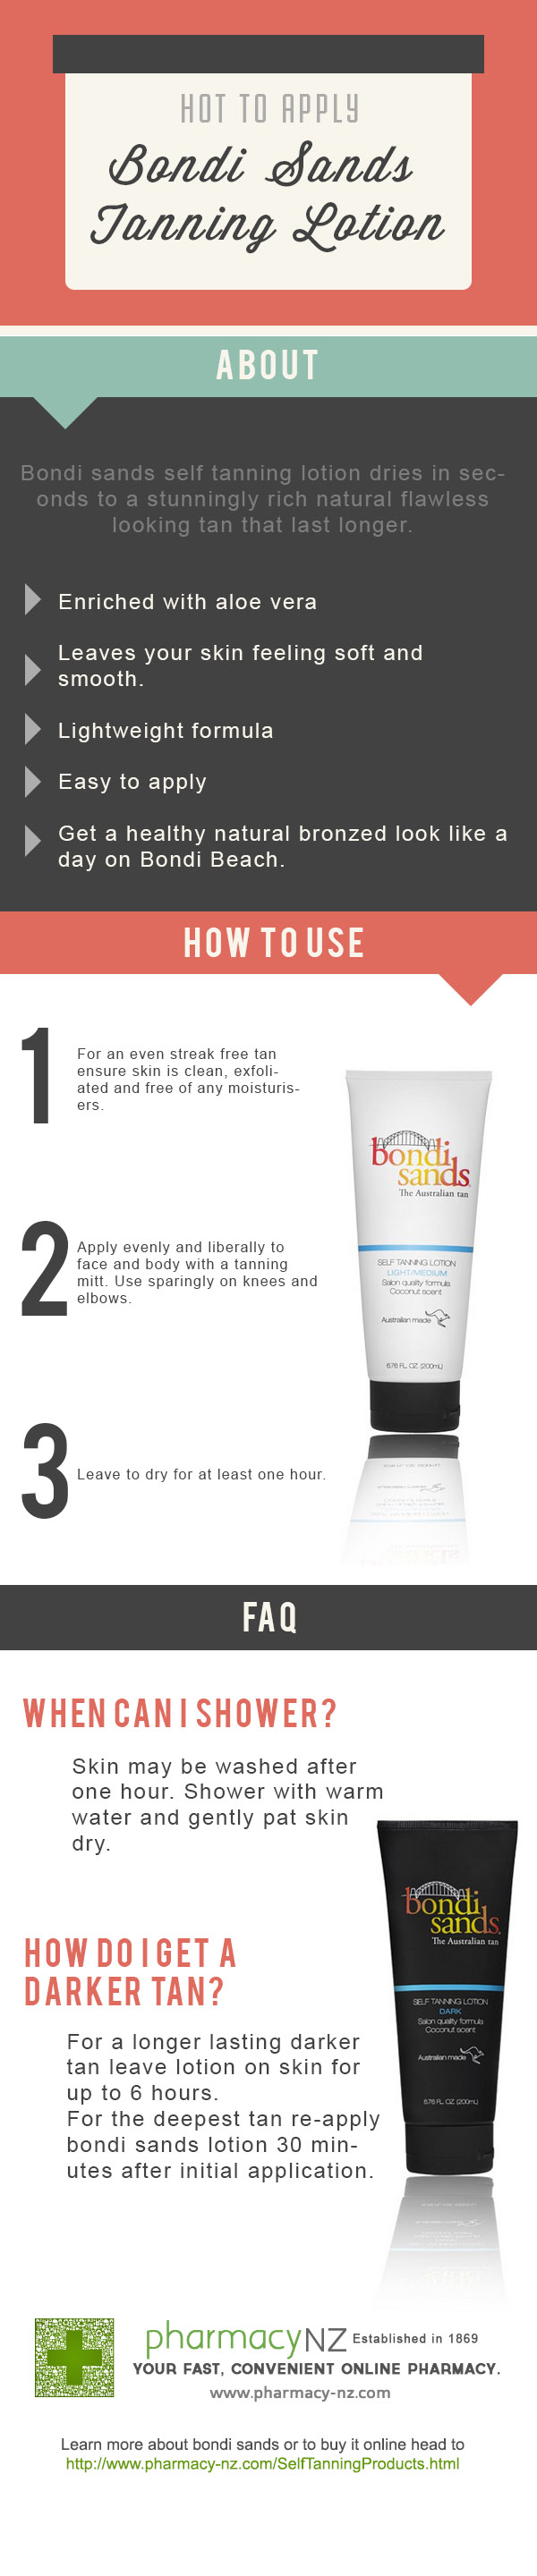 How to Apply Bondi Sands 
Fake Tan